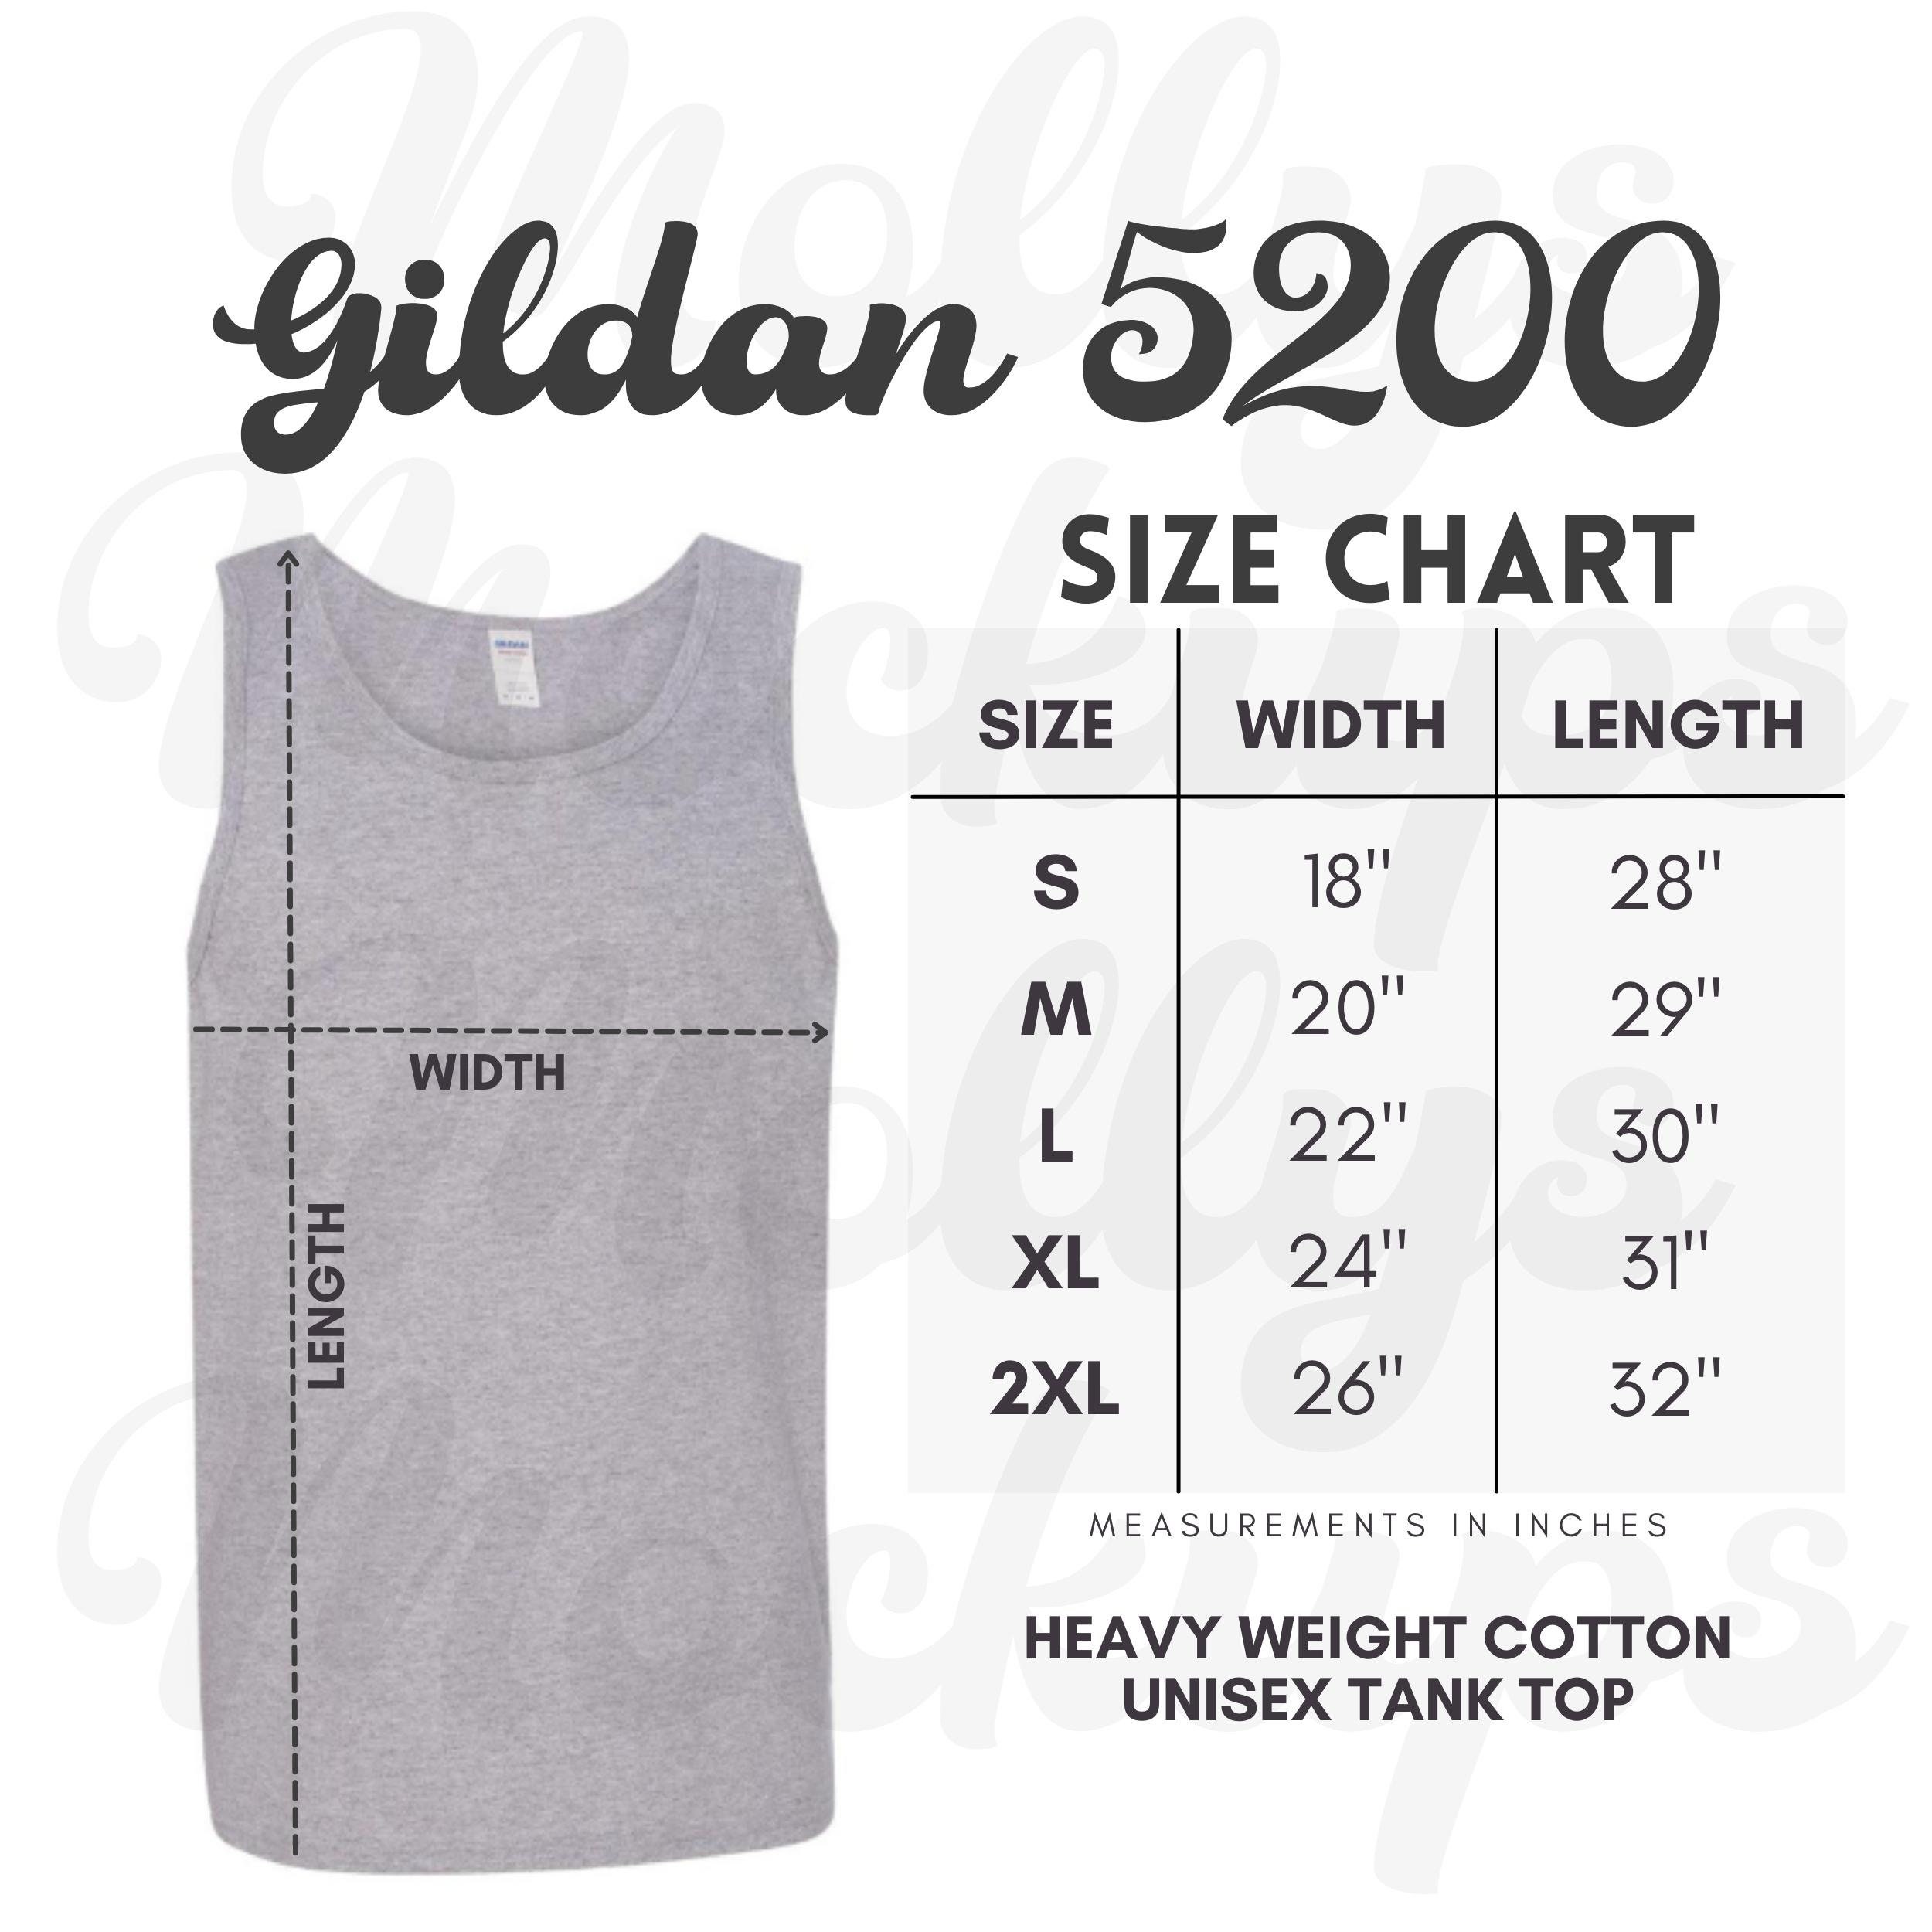 5200 SIZE CHART Gildan 5200 Size Chart Gildan Tank Top Size - Etsy